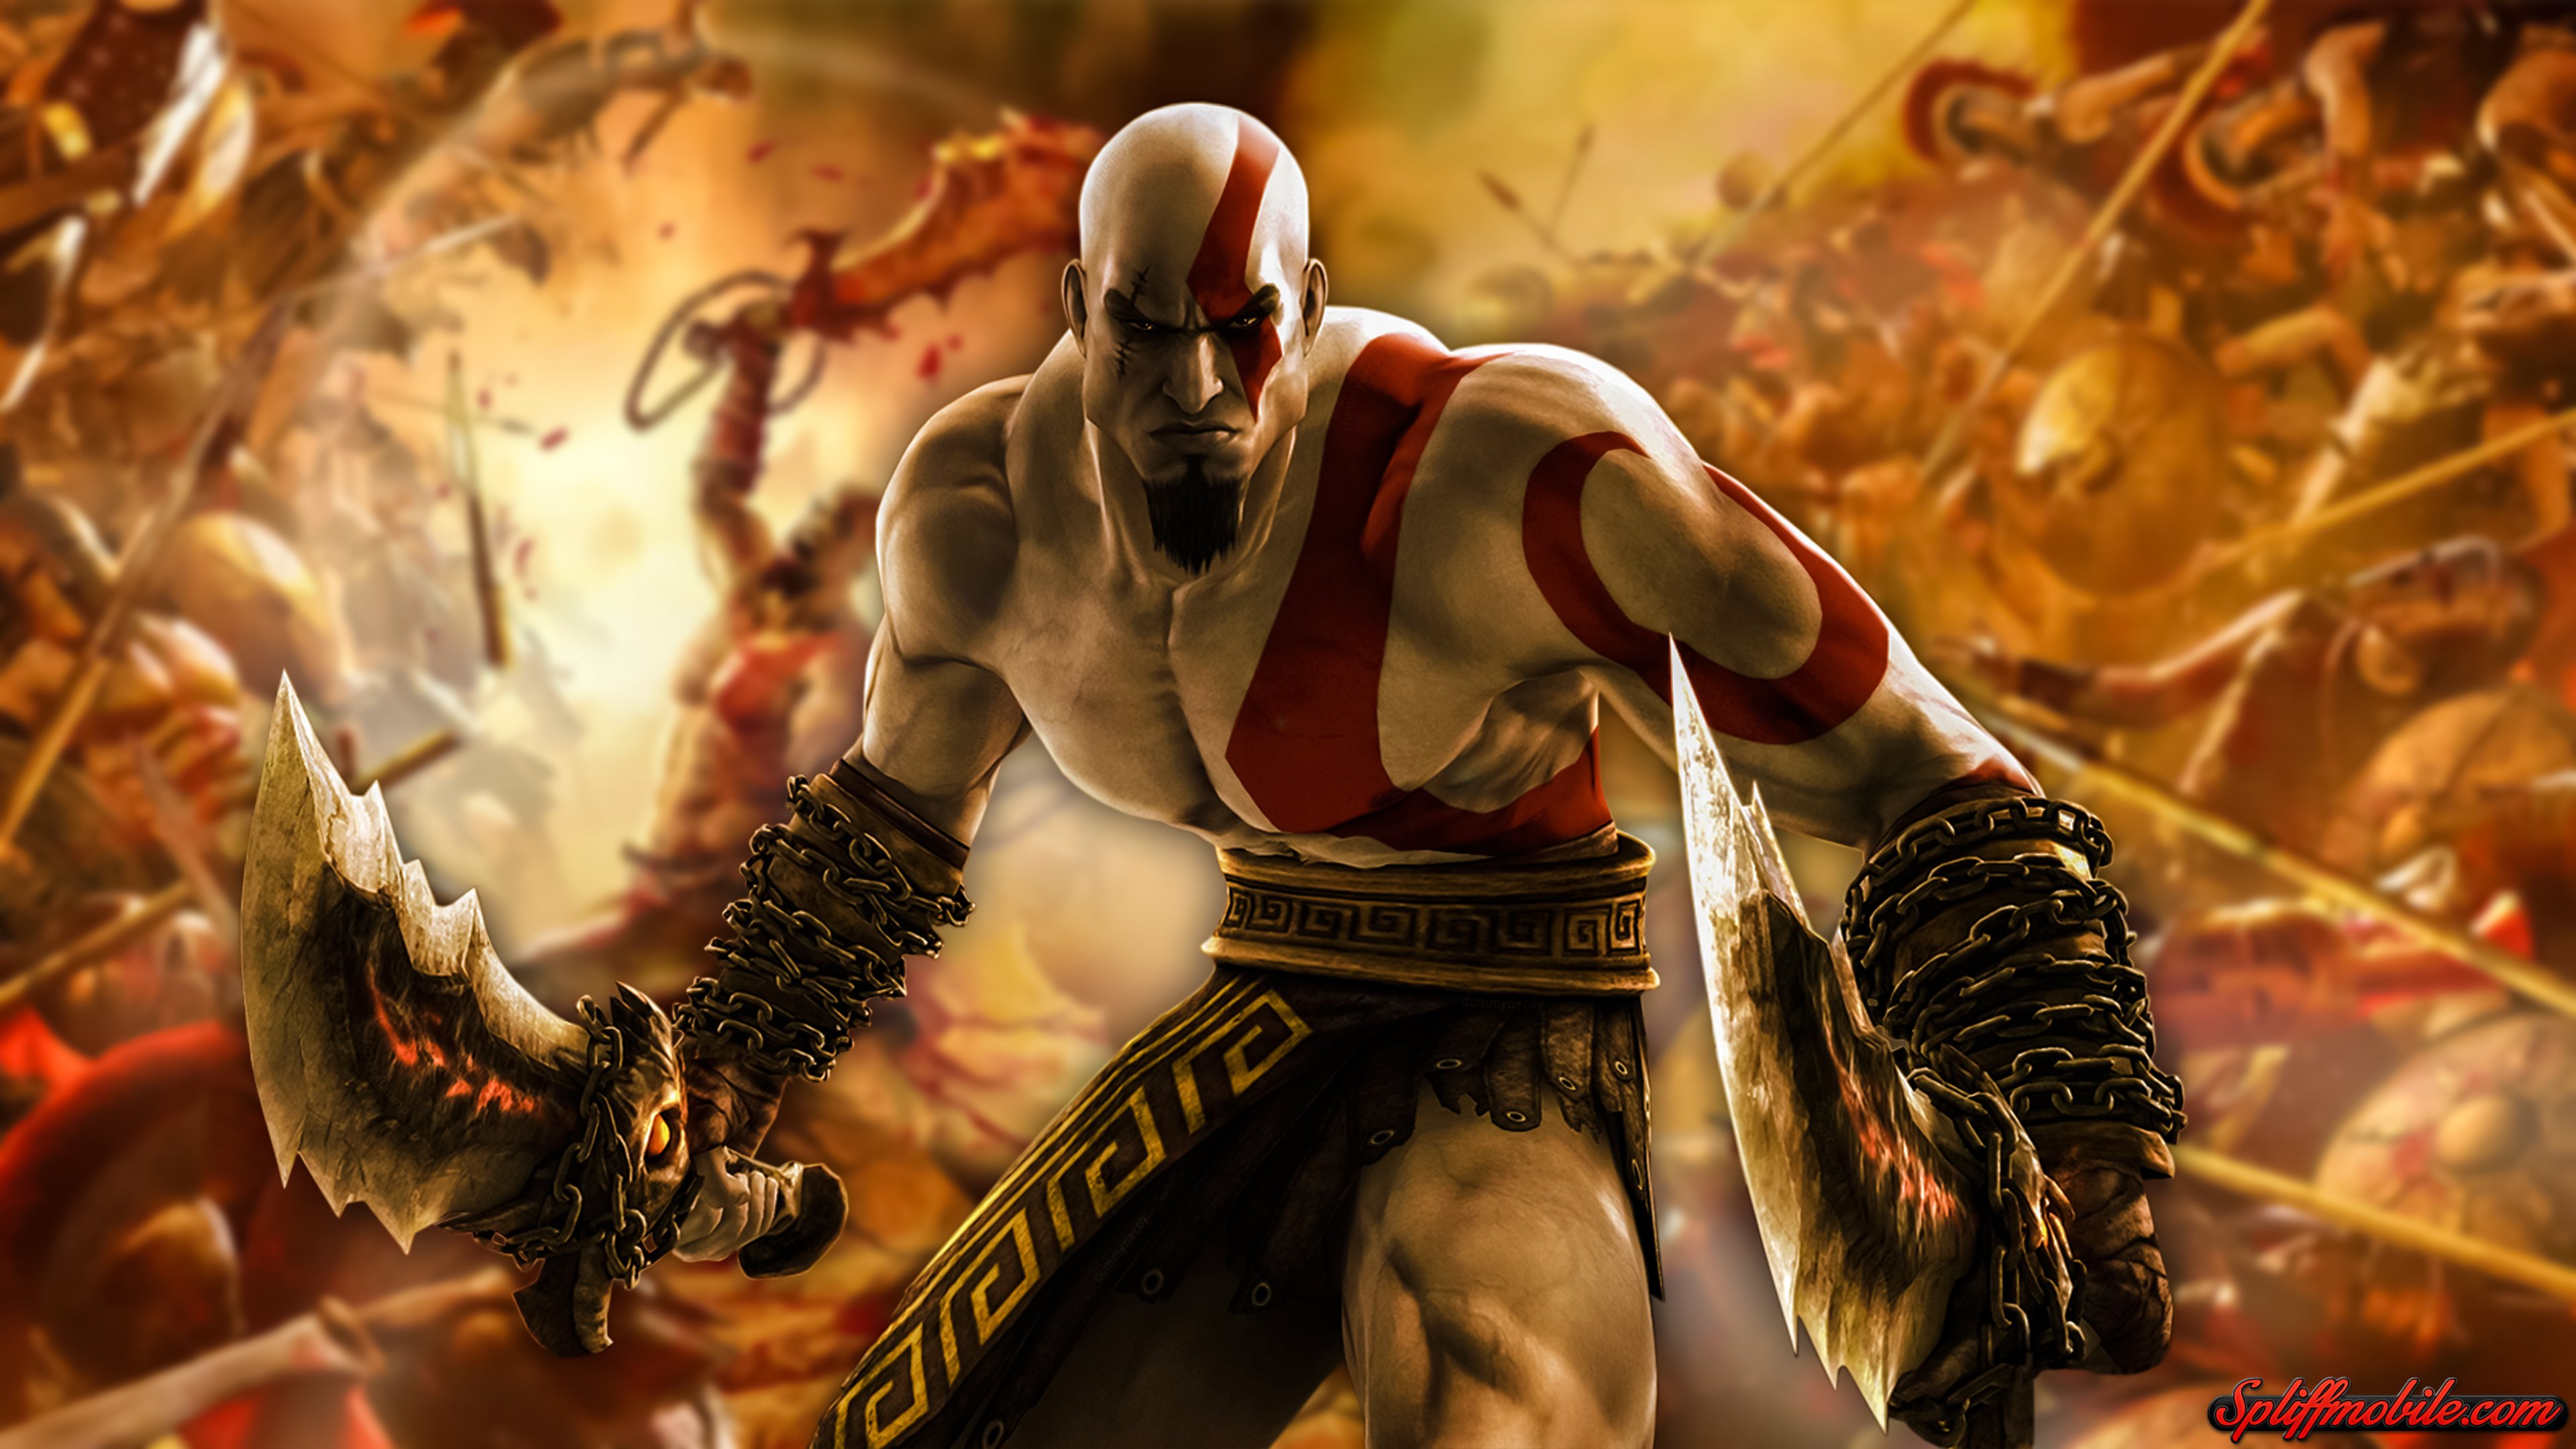 god of war 3 mobile game free download